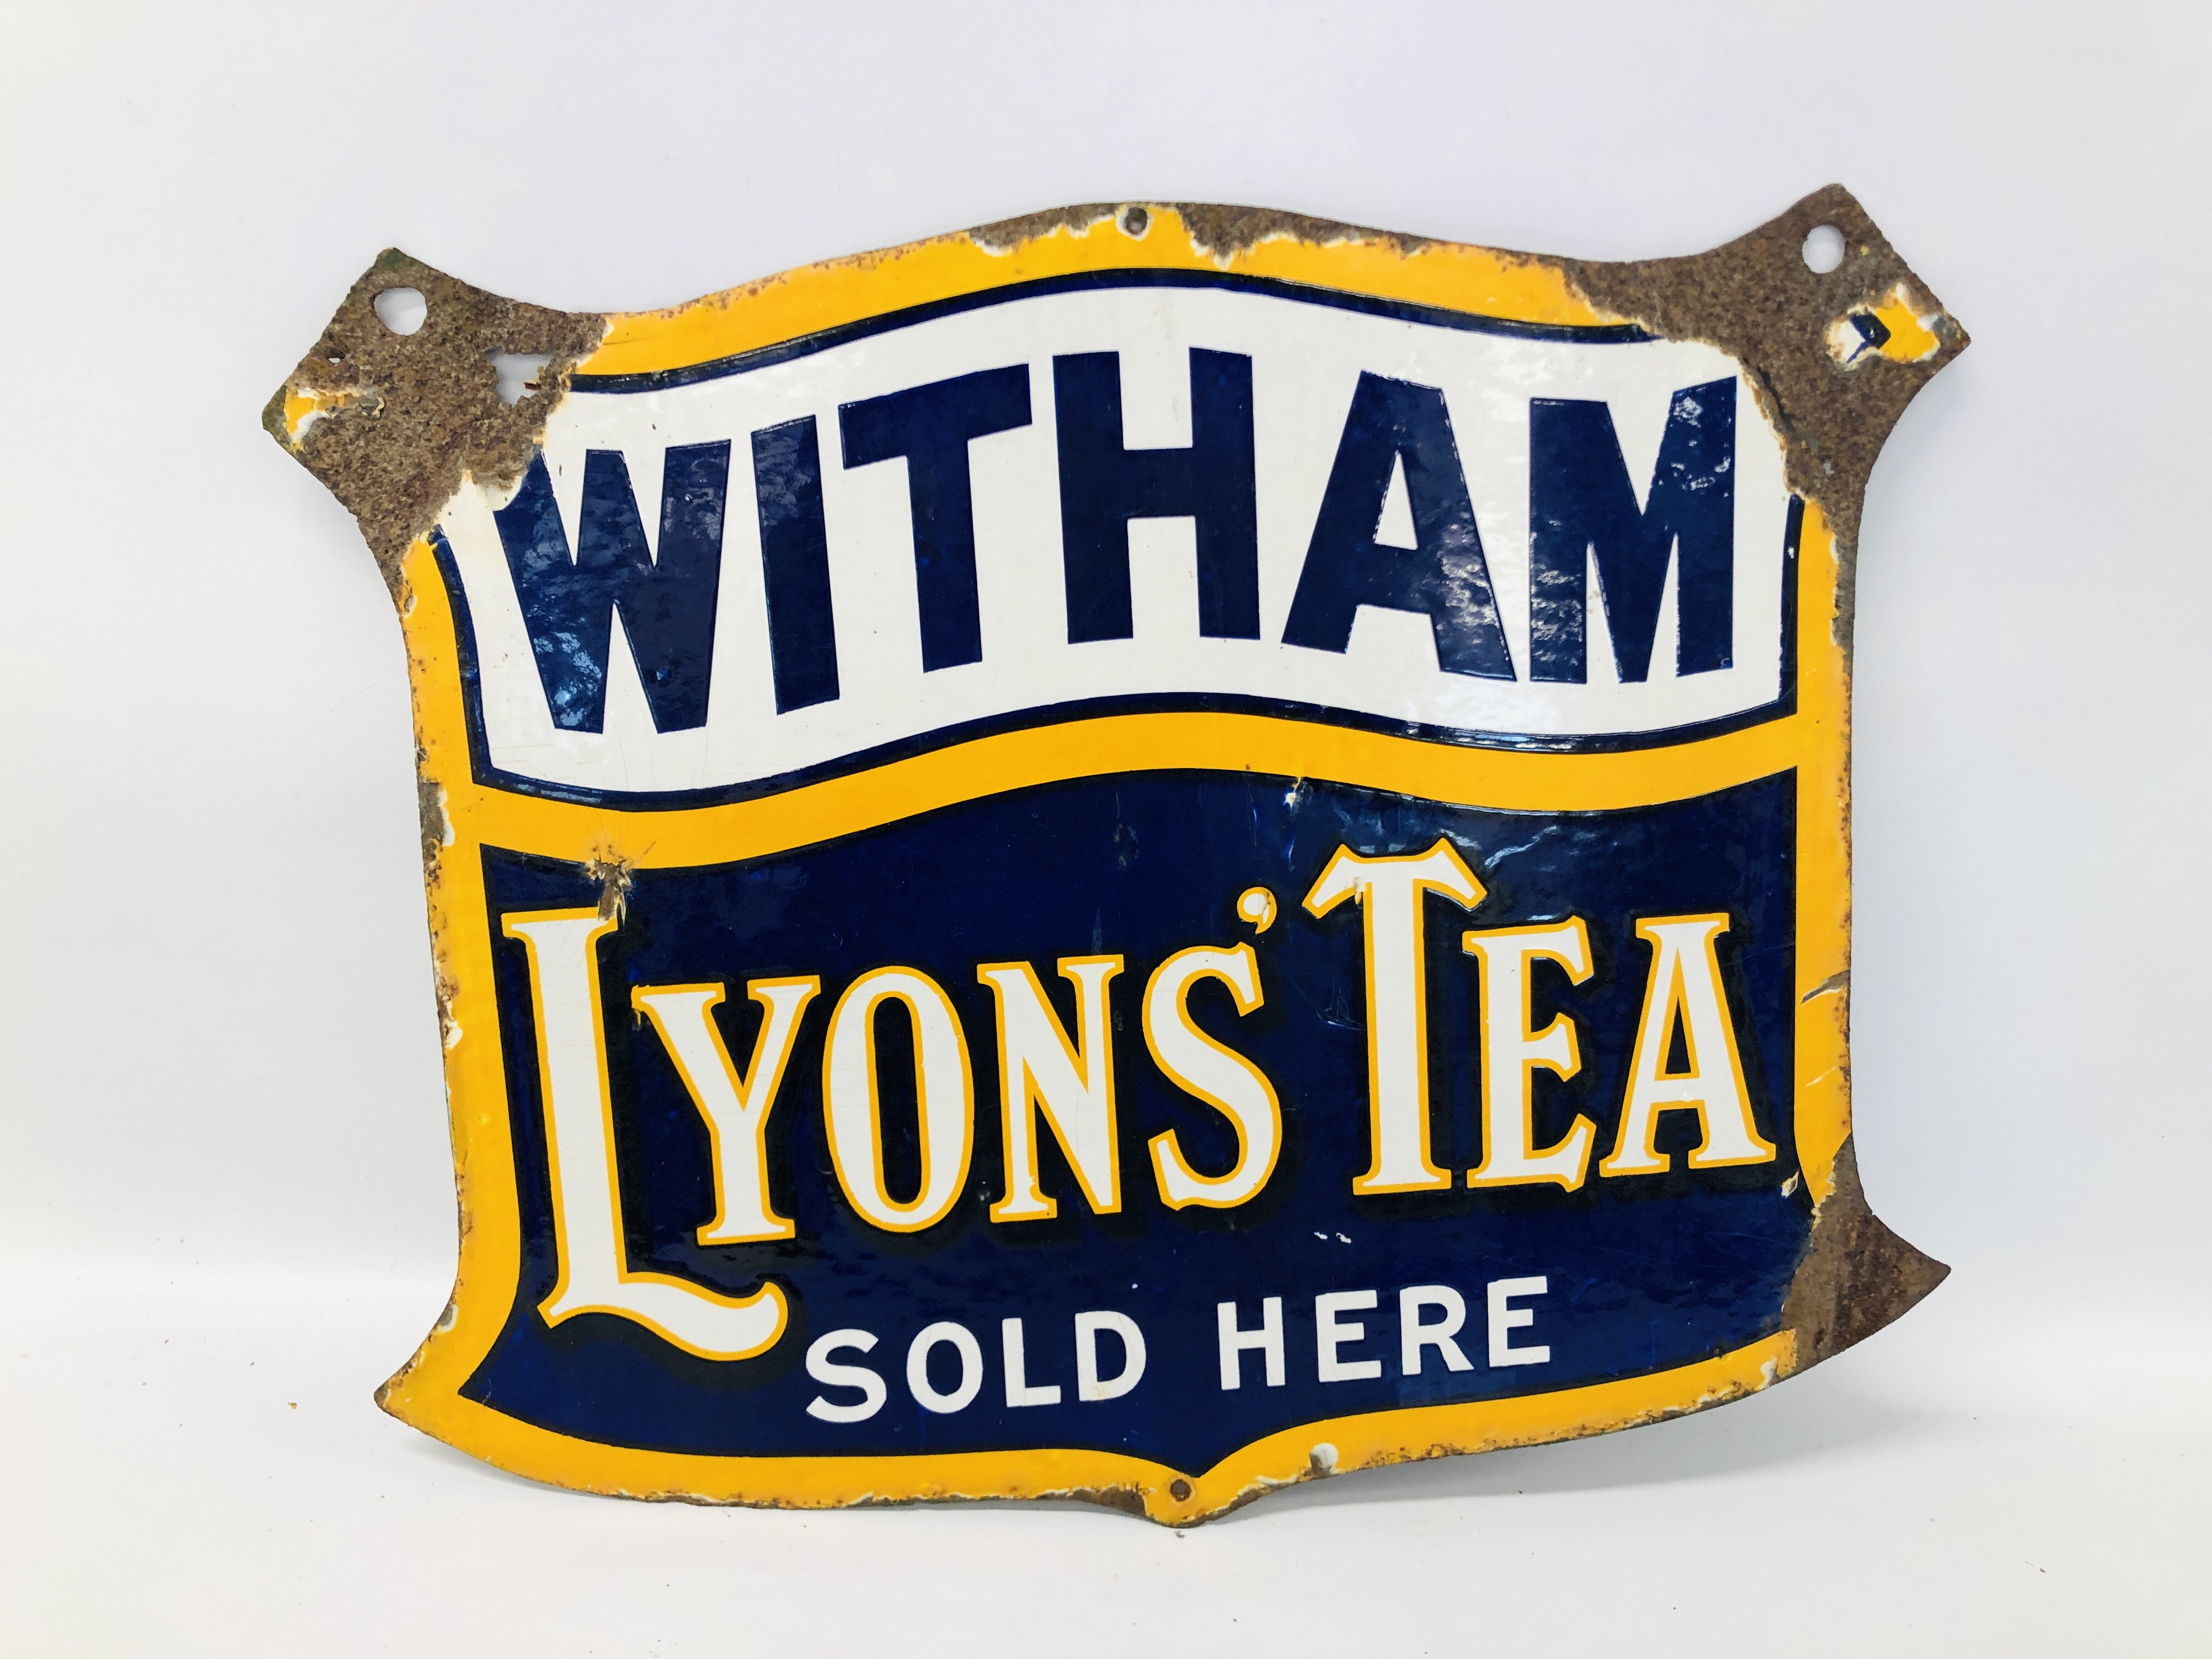 A VINTAGE "WITHAM LYONS' TEA SOLD HERE" ENAMEL ADVERTISING SIGN - W 56CM. H 46CM.